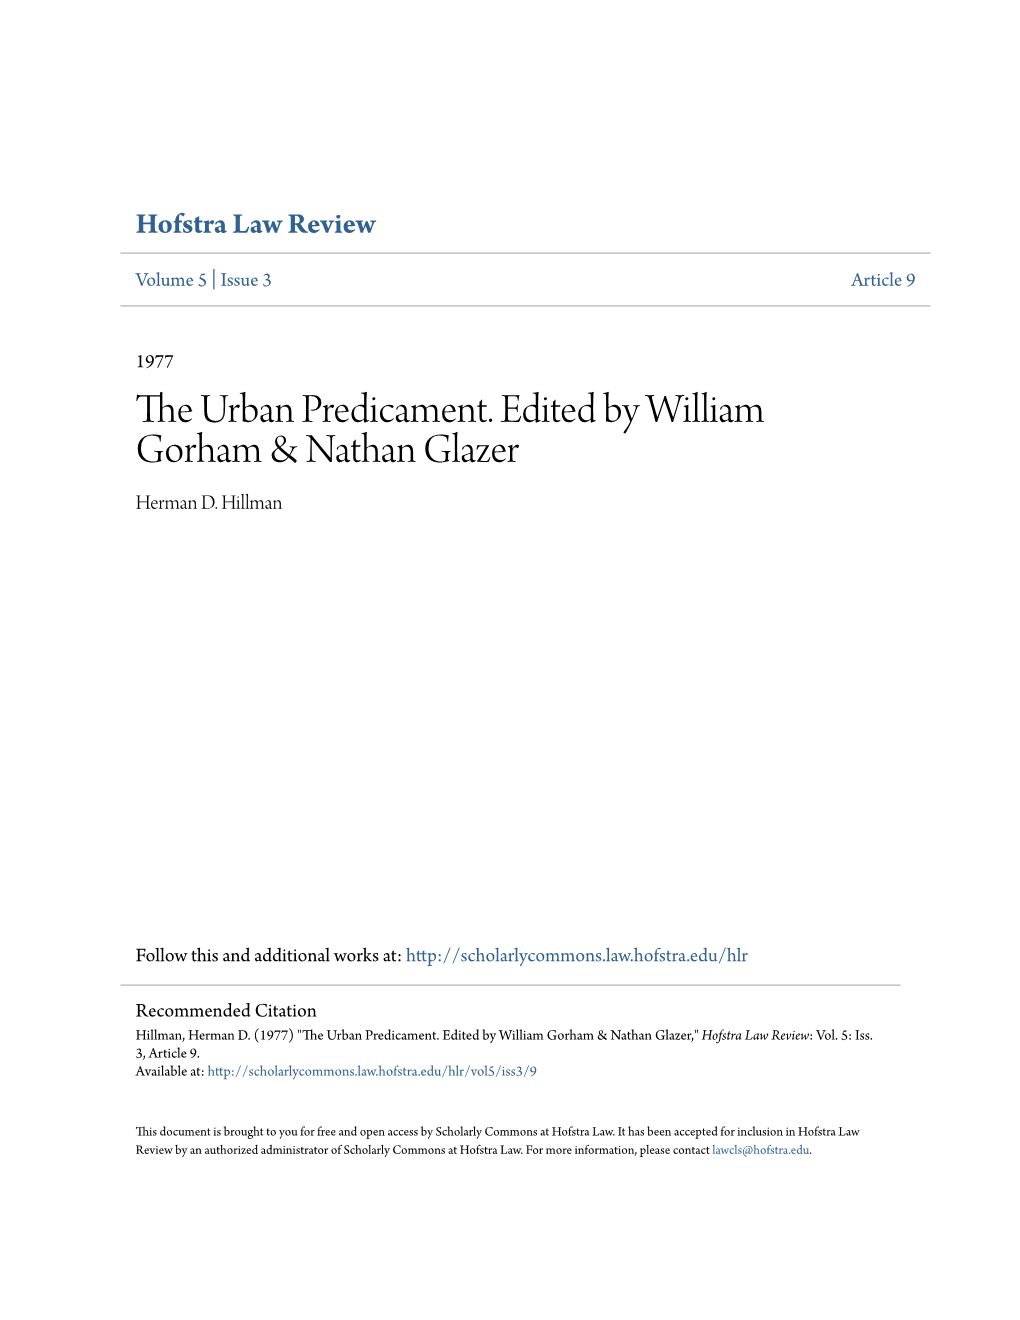 The Urban Predicament. Edited by William Gorham & Nathan Glazer